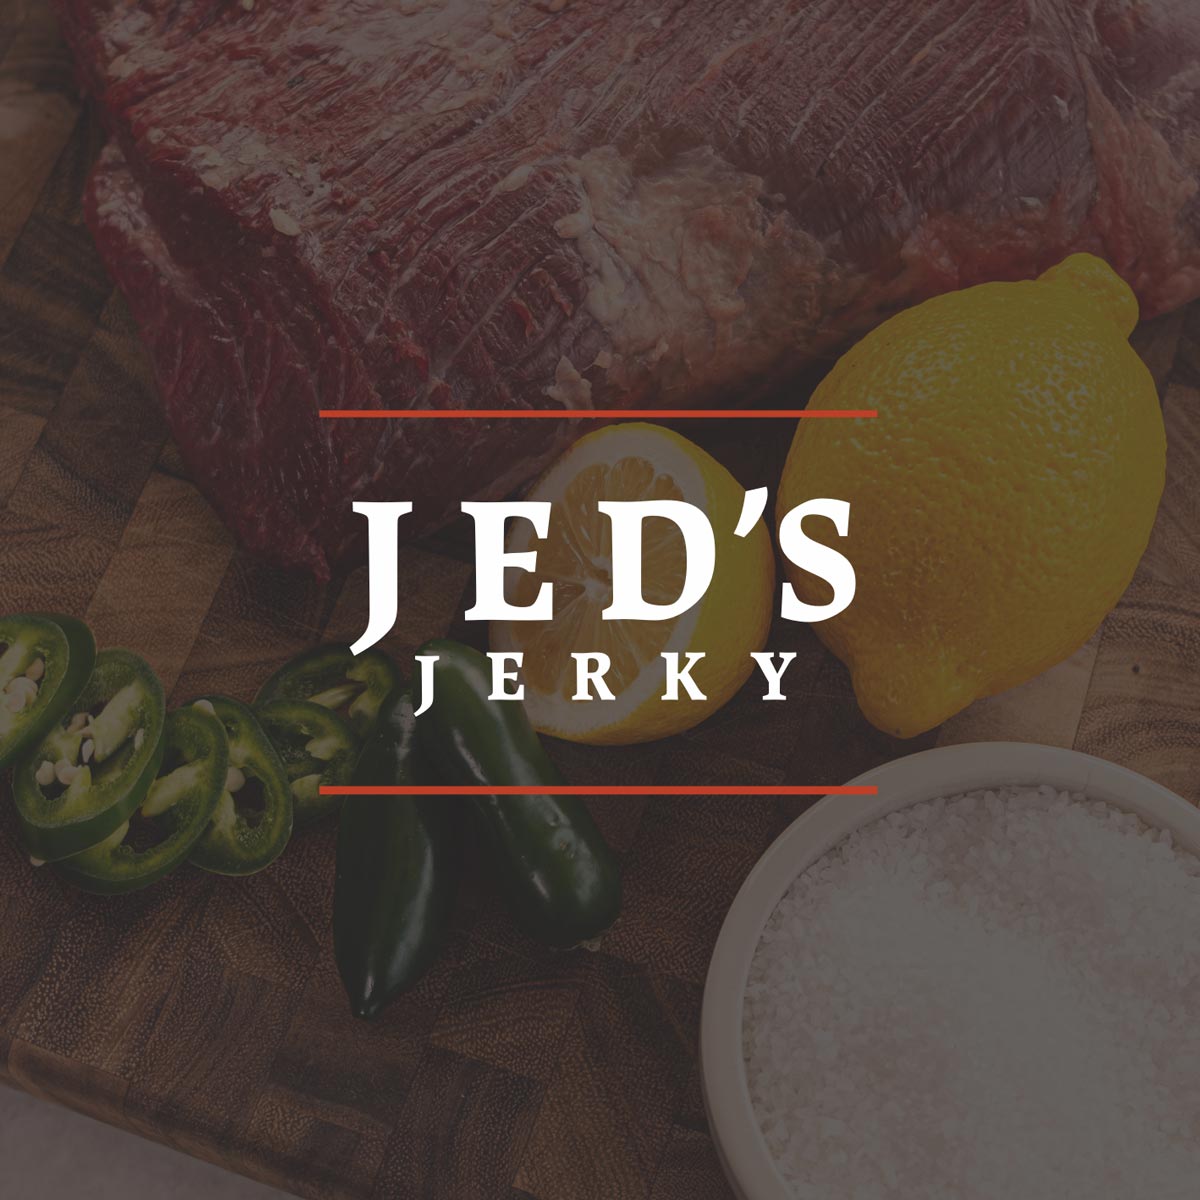 Jed's Jerky Brand Logo layered over Image